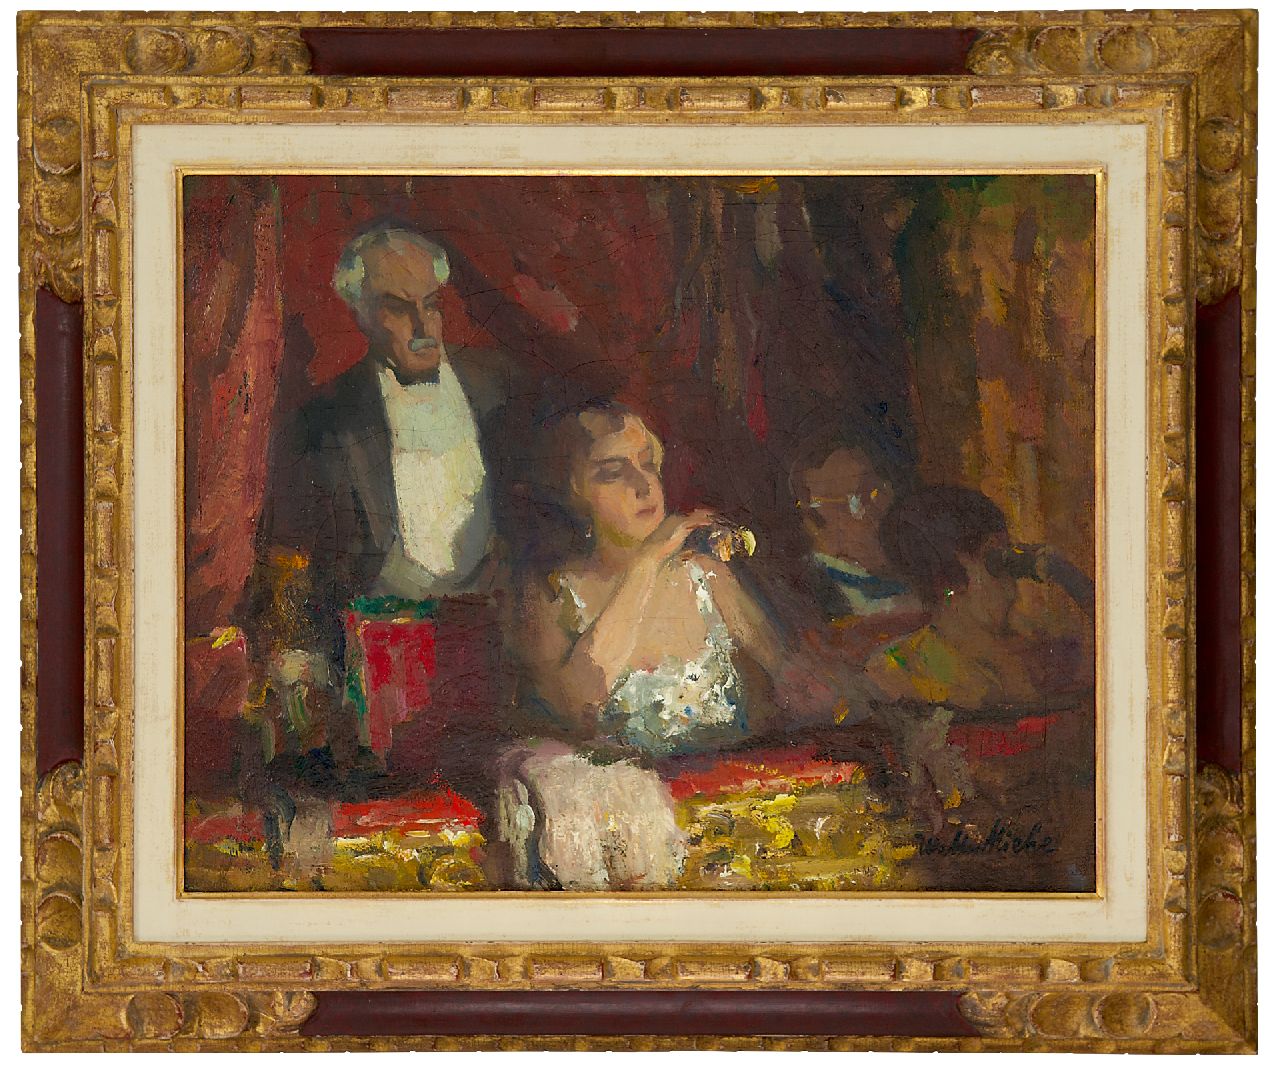 Miehe W.  | Walter Miehe, In the theatre, oil on canvas 40.0 x 50.3 cm, signed l.r.